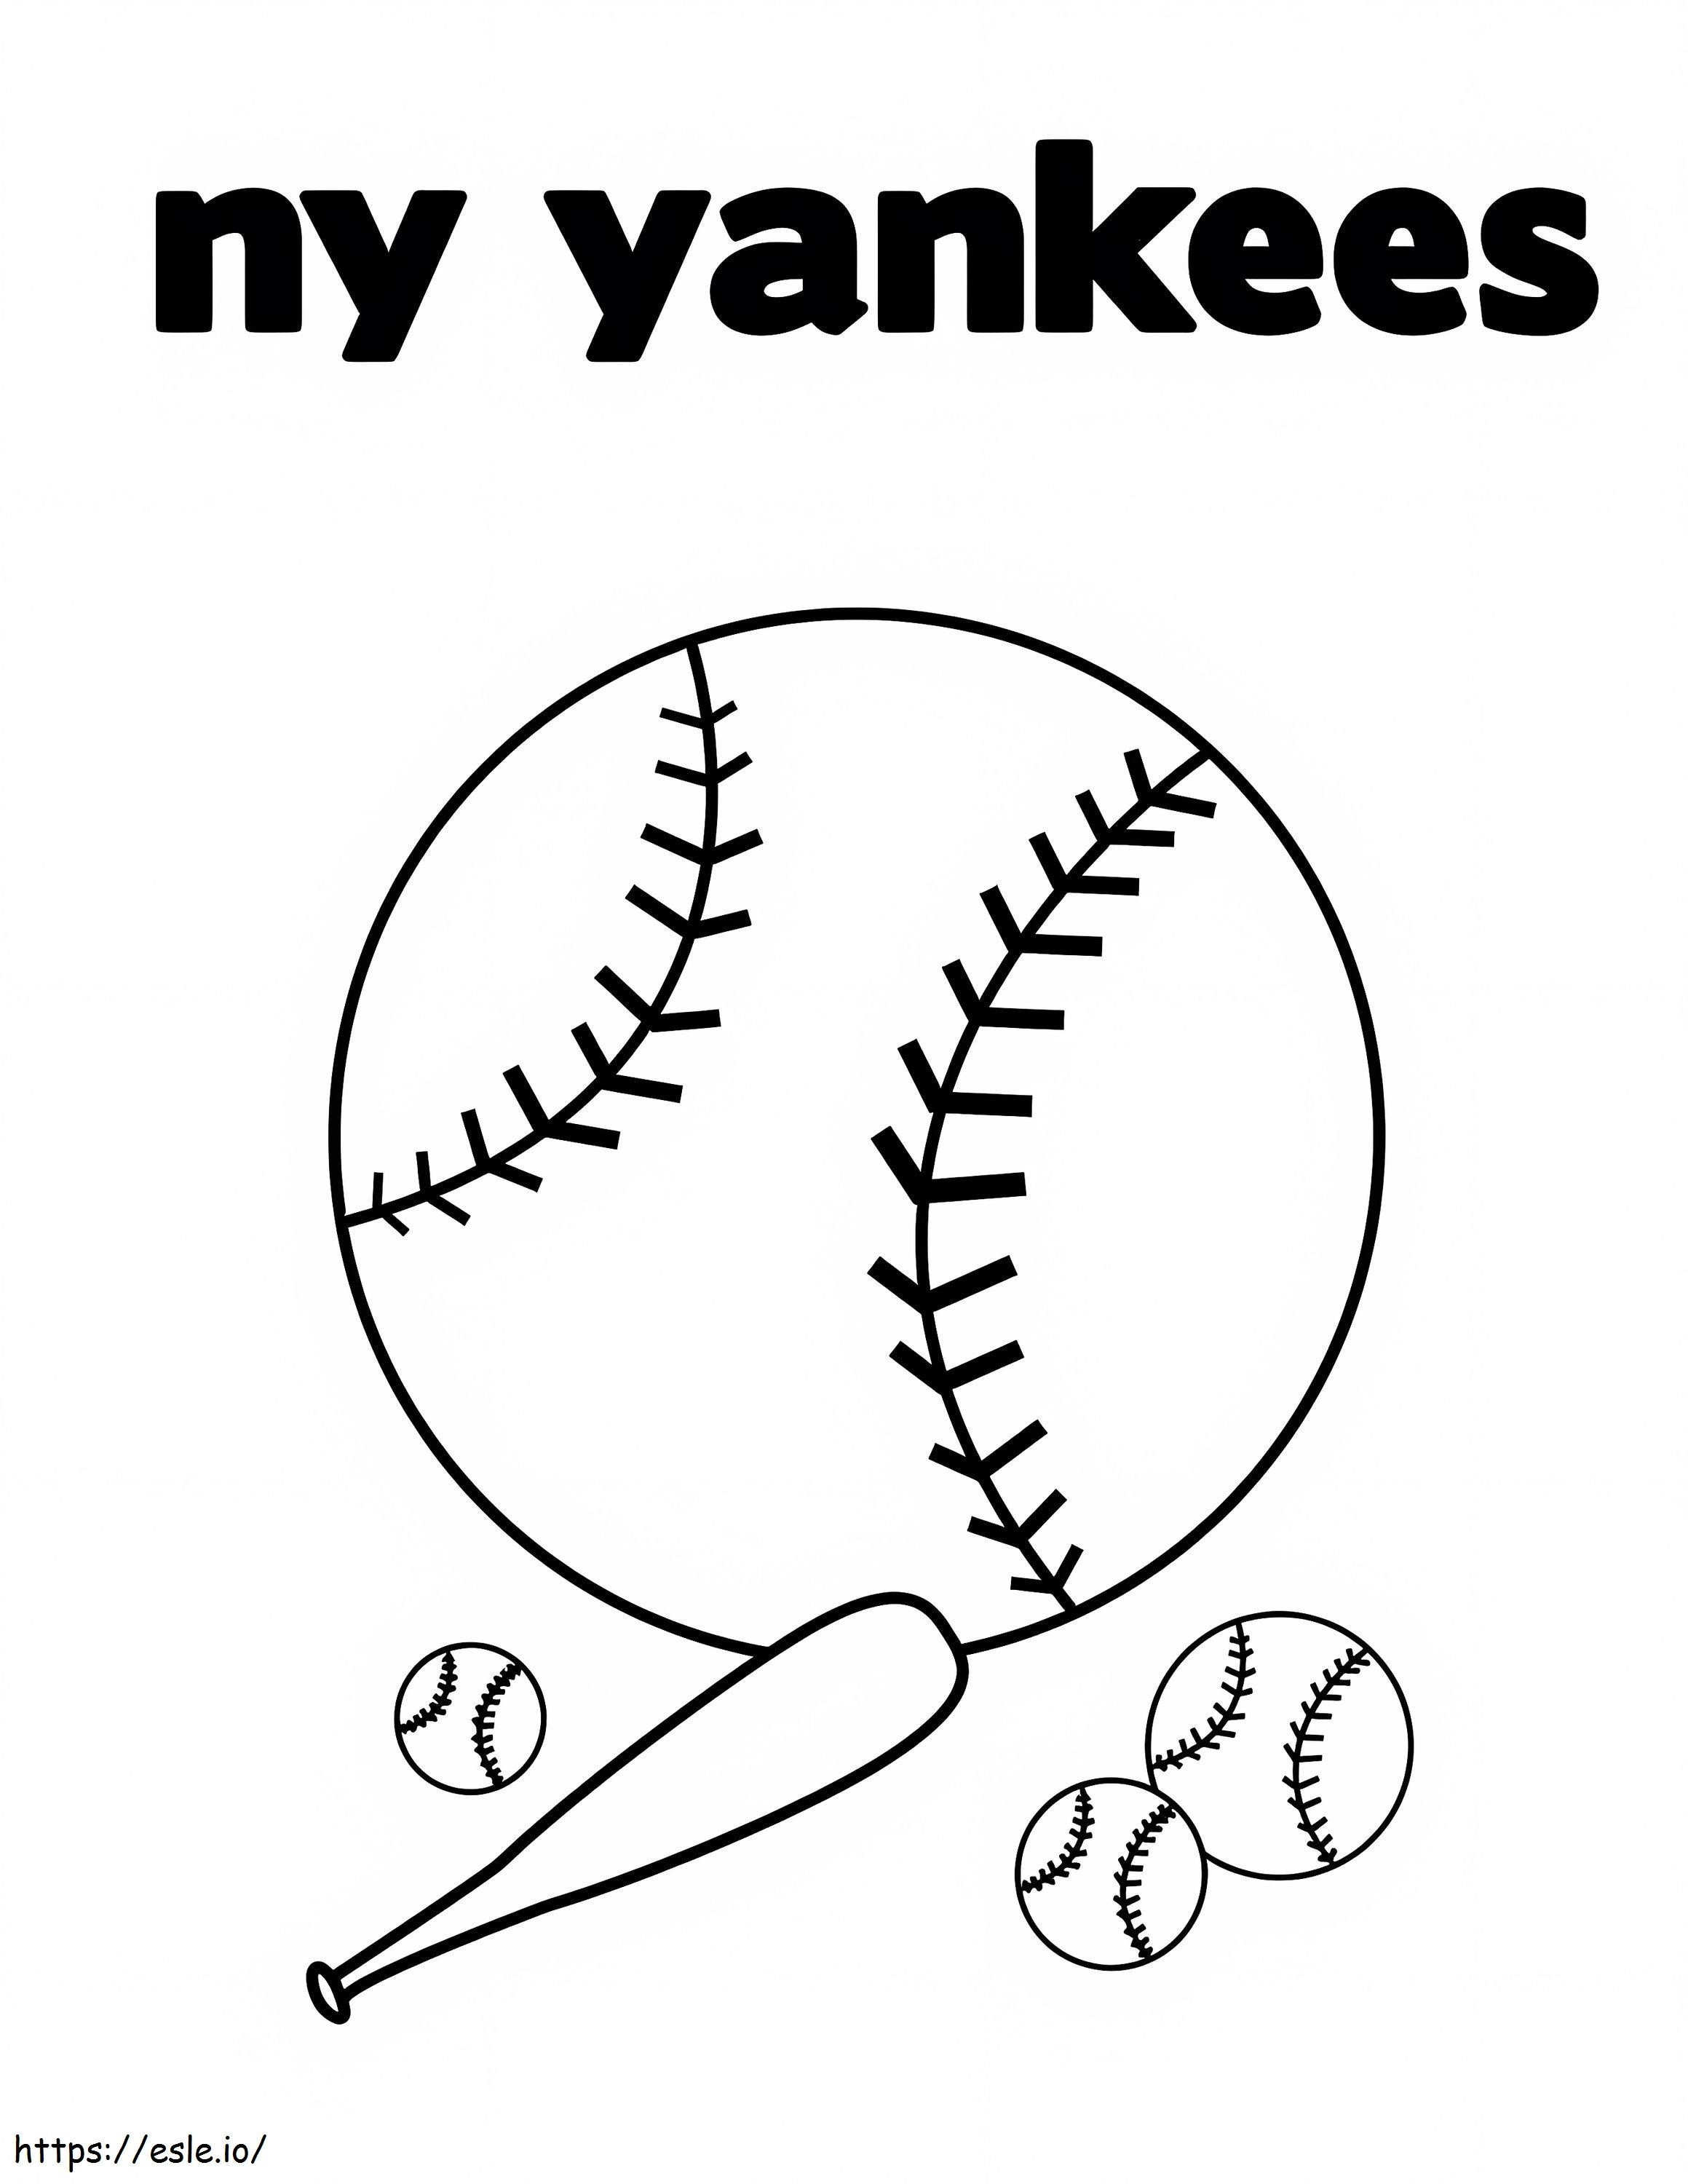 New York Yankees 3 boyama